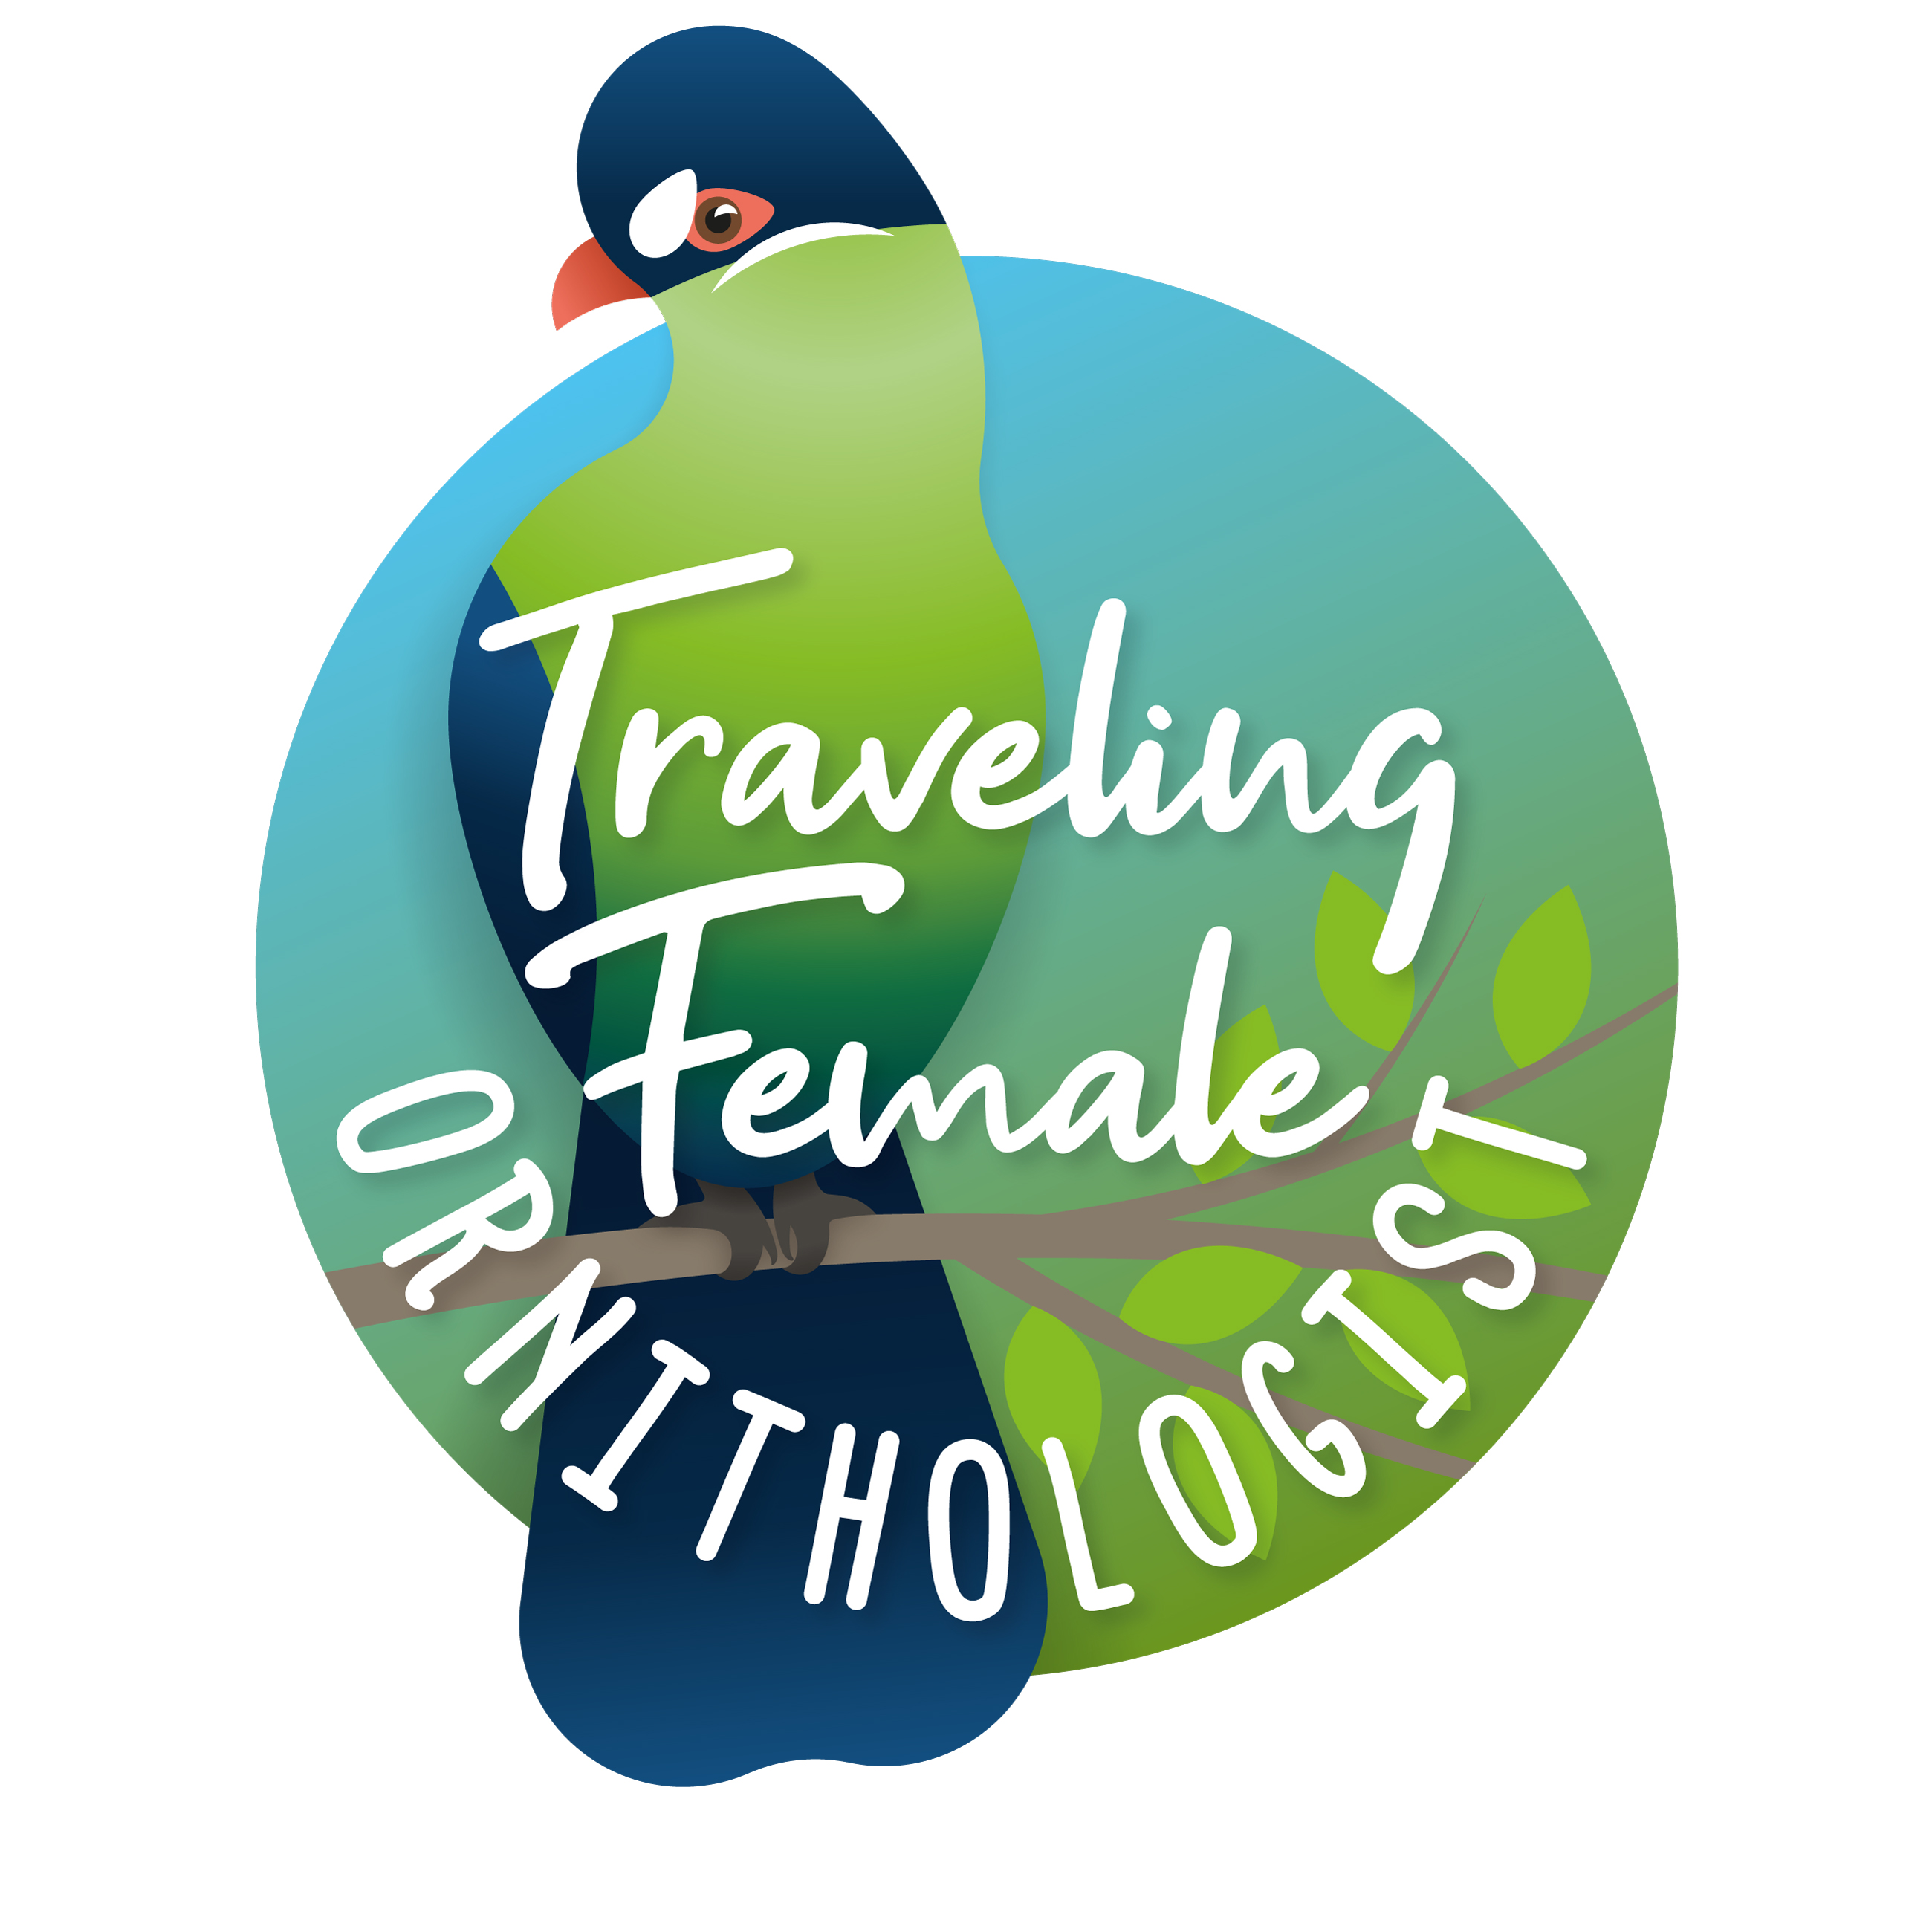 Hartlaubs turaco on a branch Traveling Female Ornithologist logo